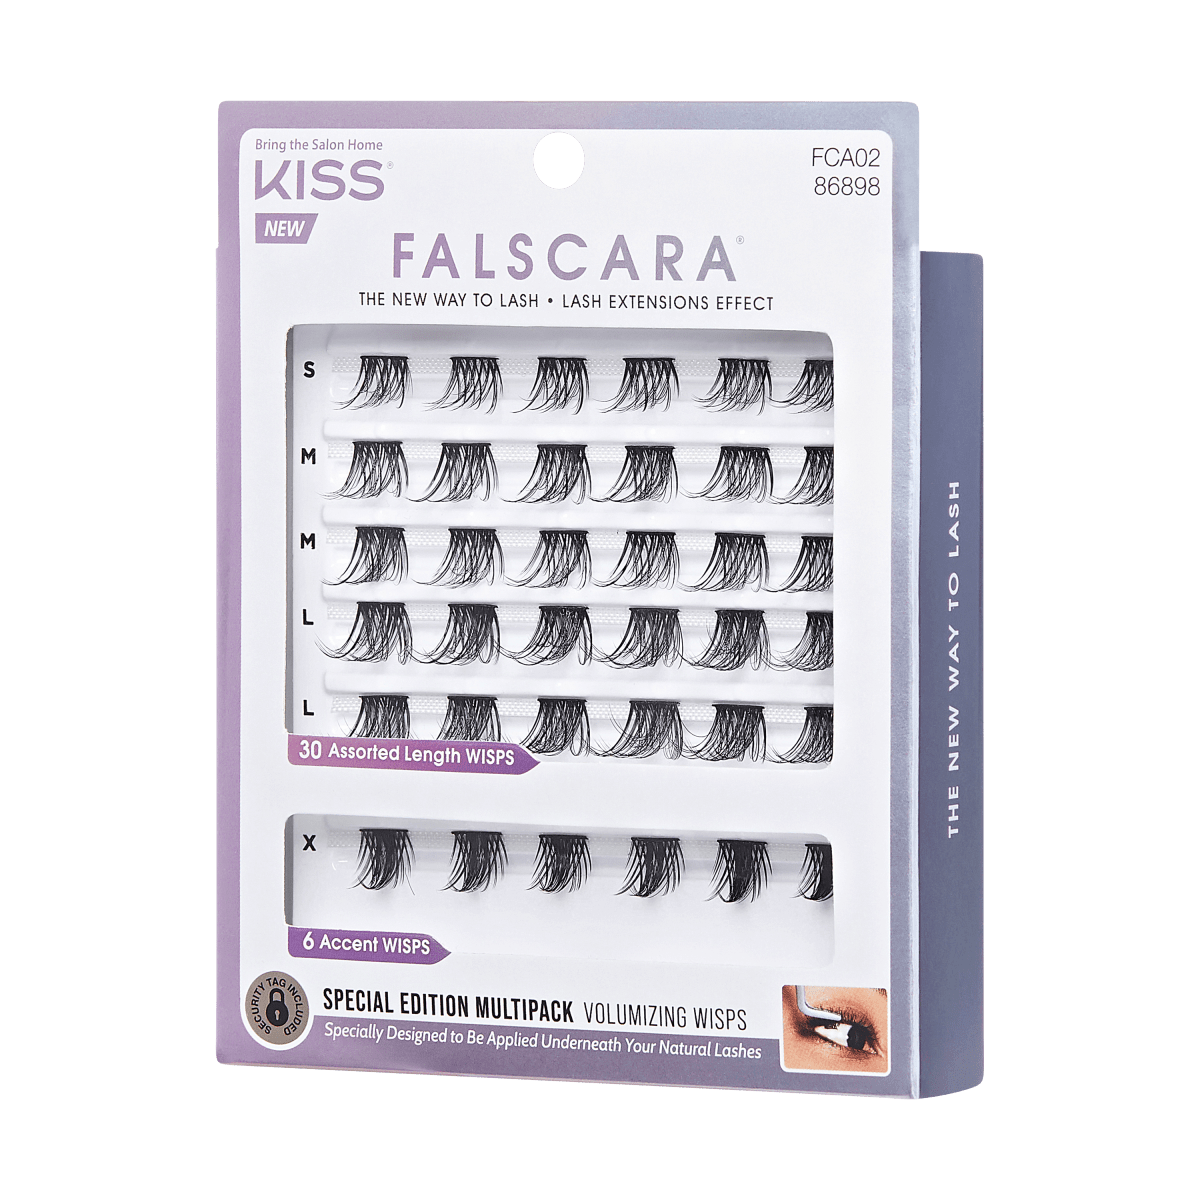 FALSCARA Wisps Special Edition Multipack - Volumizing